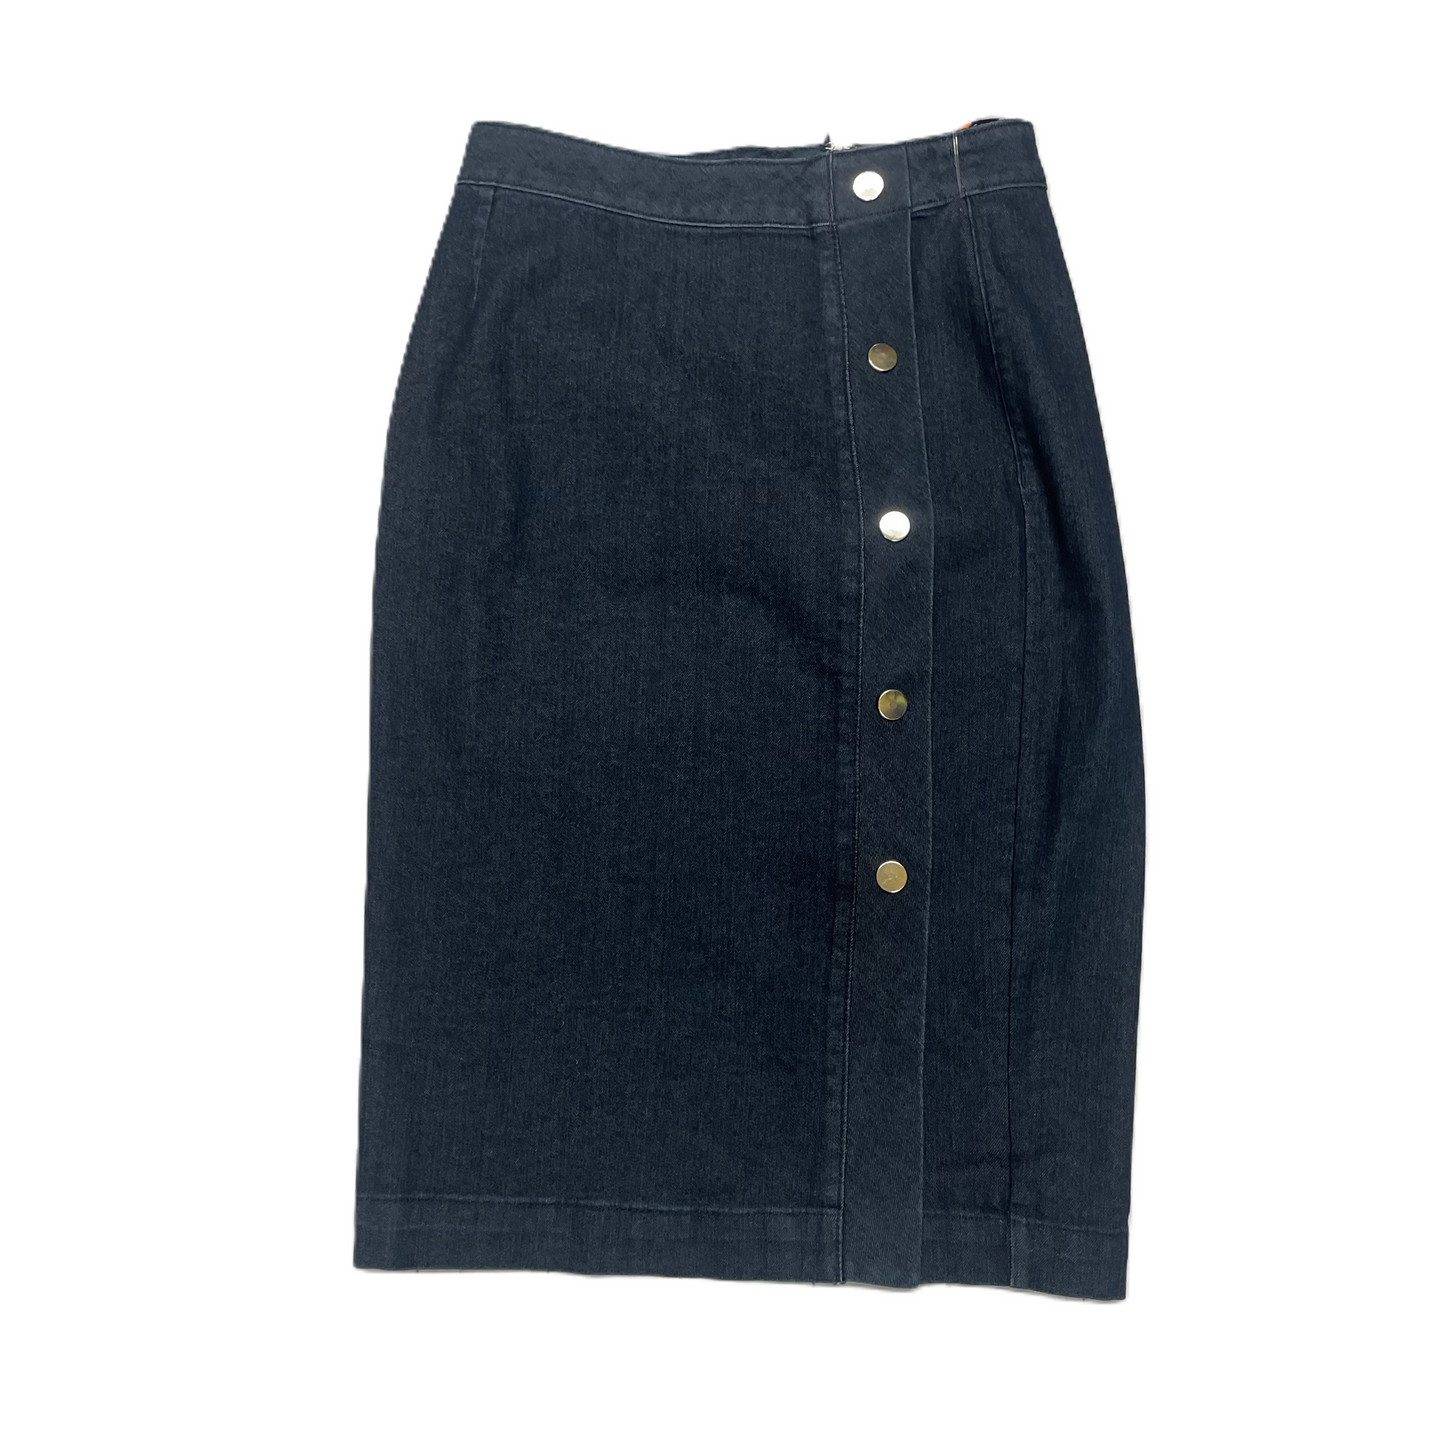 Blue Skirt Midi By White House Black Market, Size: Xs